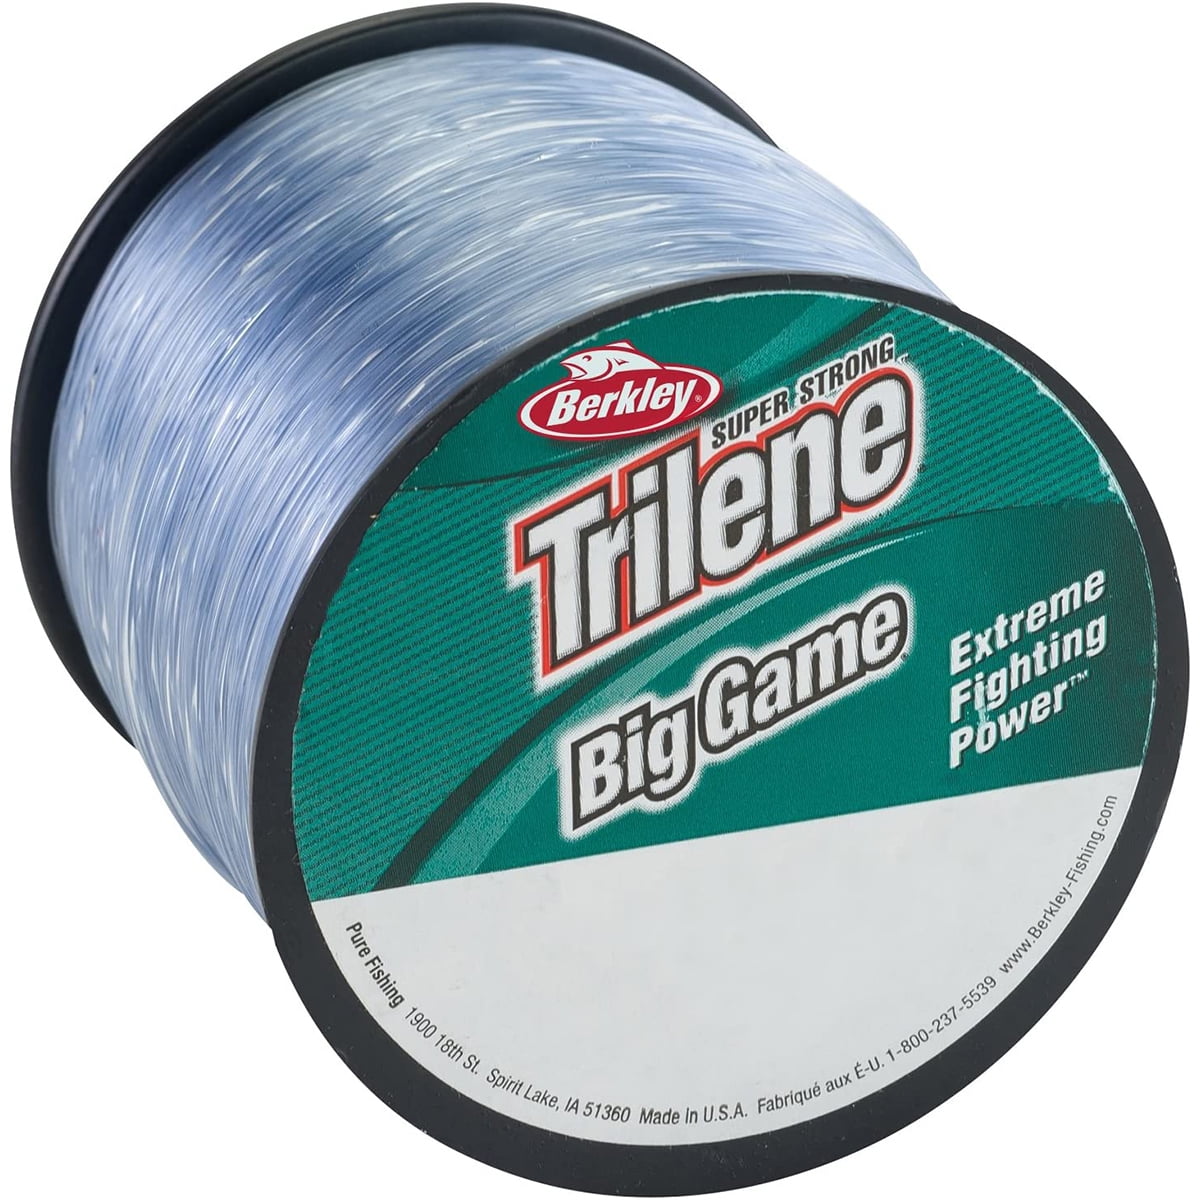 Berkley Trilene Big Game, Green, 40lb 18.1kg Monofilament Fishing Line 